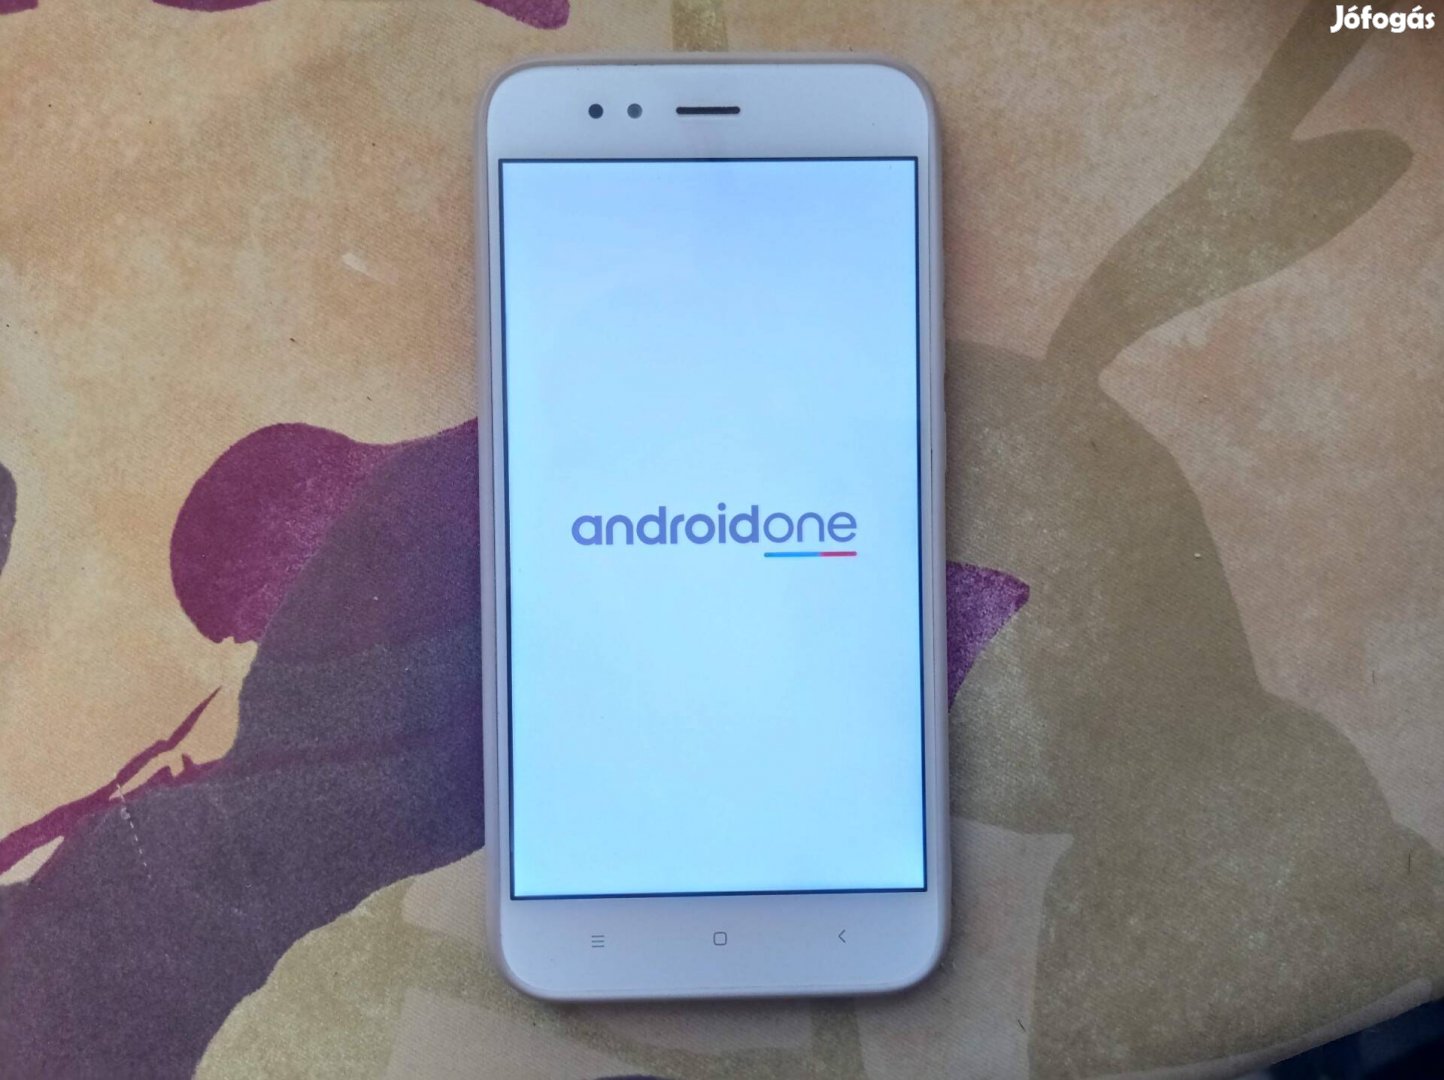 Xiaomi Mi A1 okostelefon 4GB RAM, 64GB arany színű Androidone